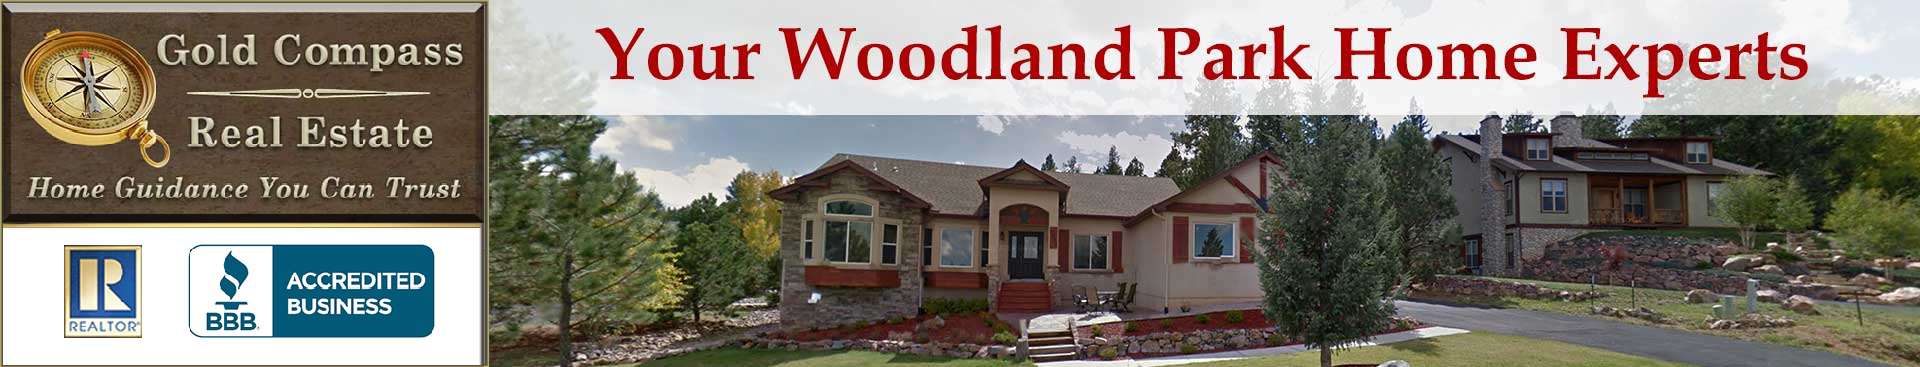 Woodland-Park-Banner